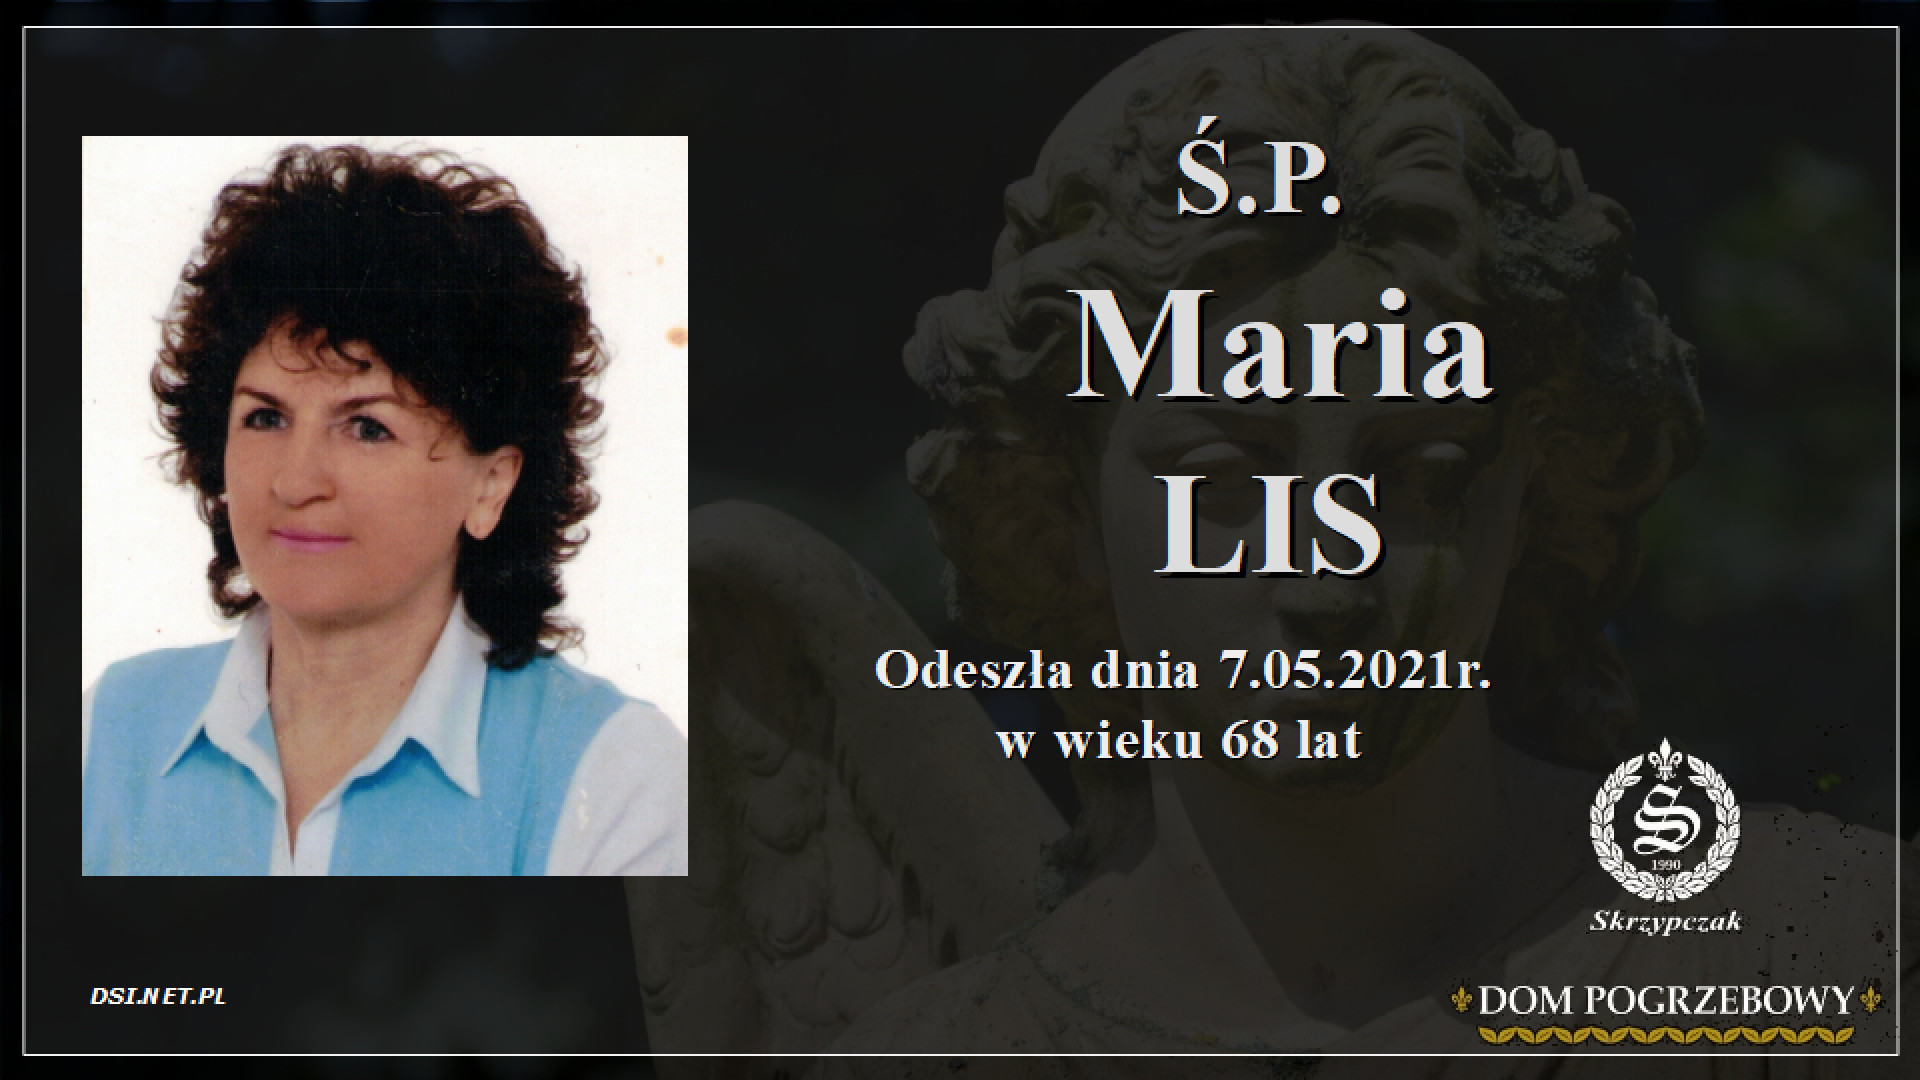 Ś.P. Maria Lis